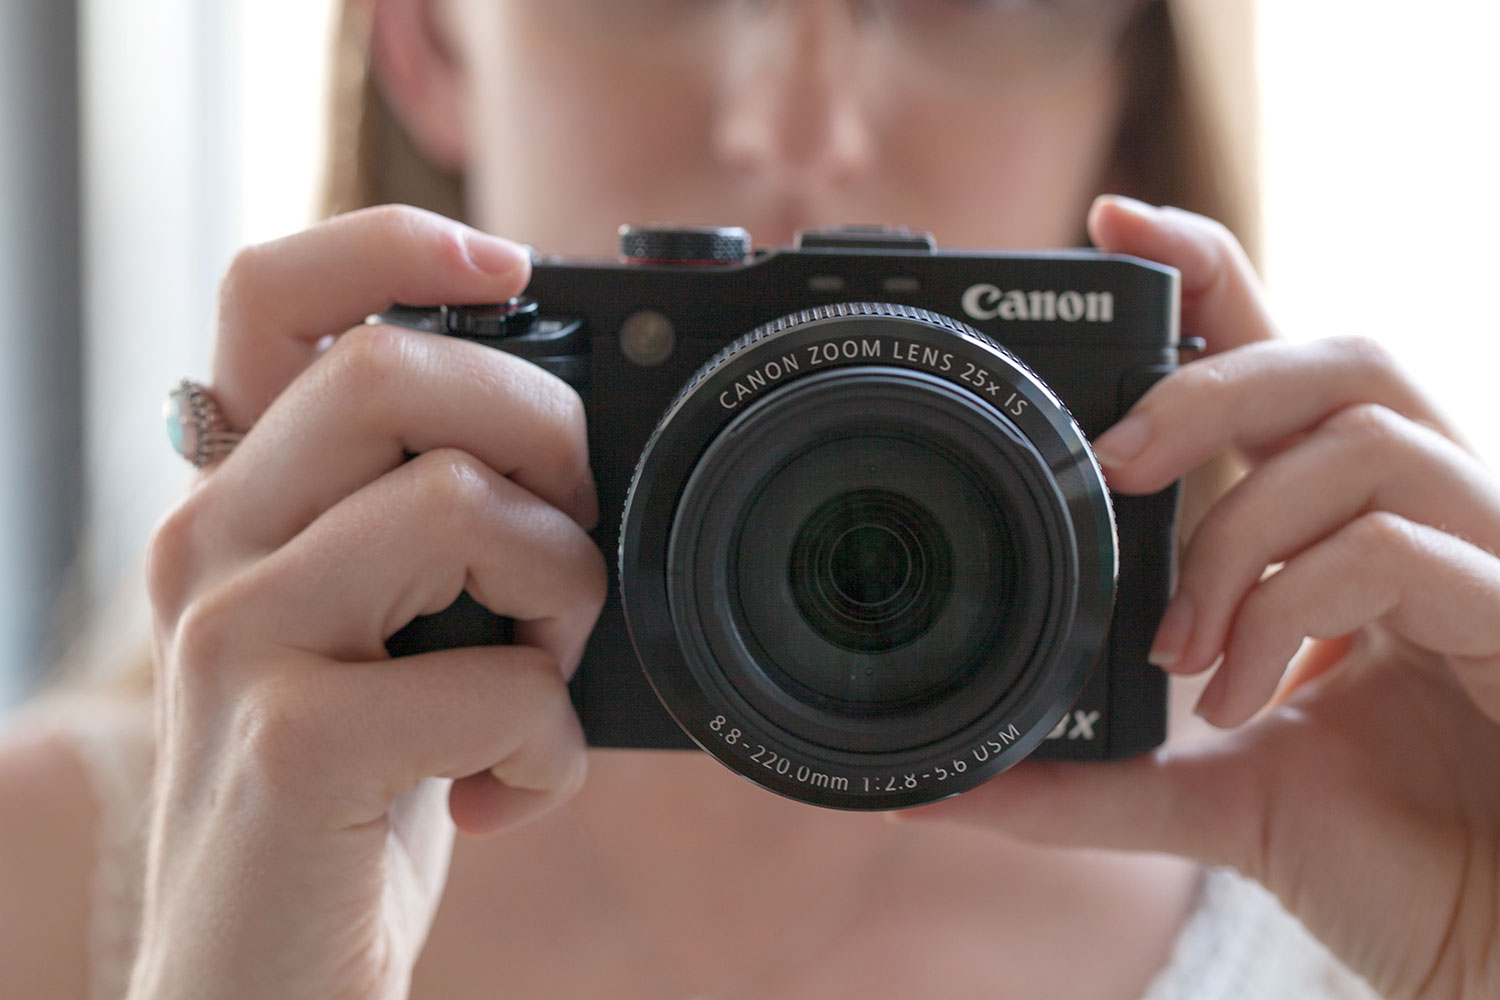 Canon PowerShot G3 X Review | Digital Trends